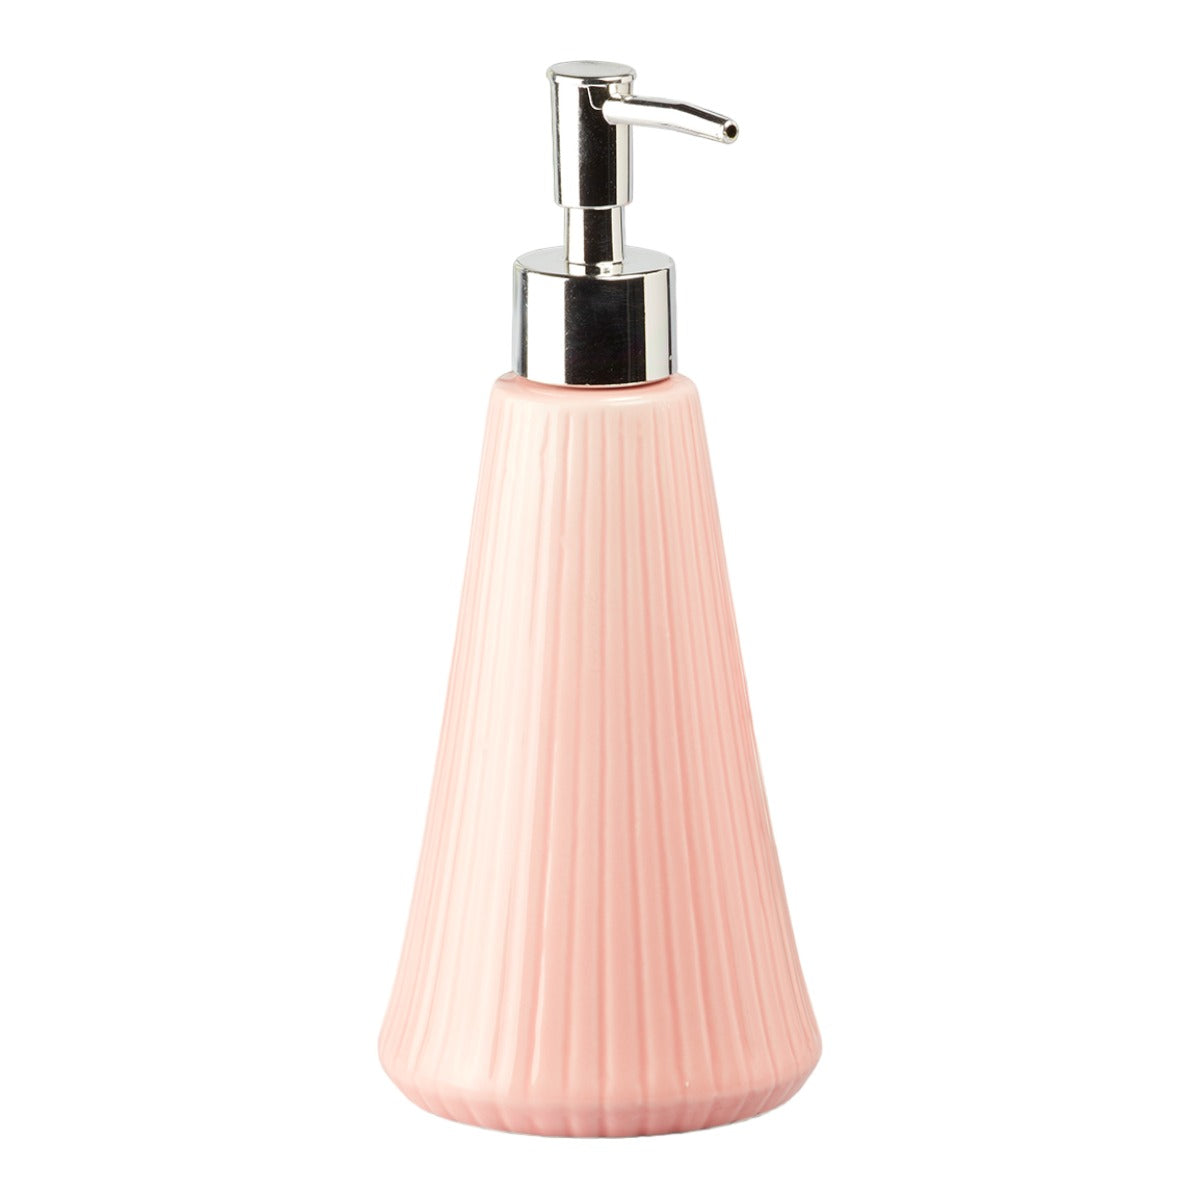 Ceramic Soap Dispenser handwash Pump for Bathroom, Set of 1, Pink (8057)